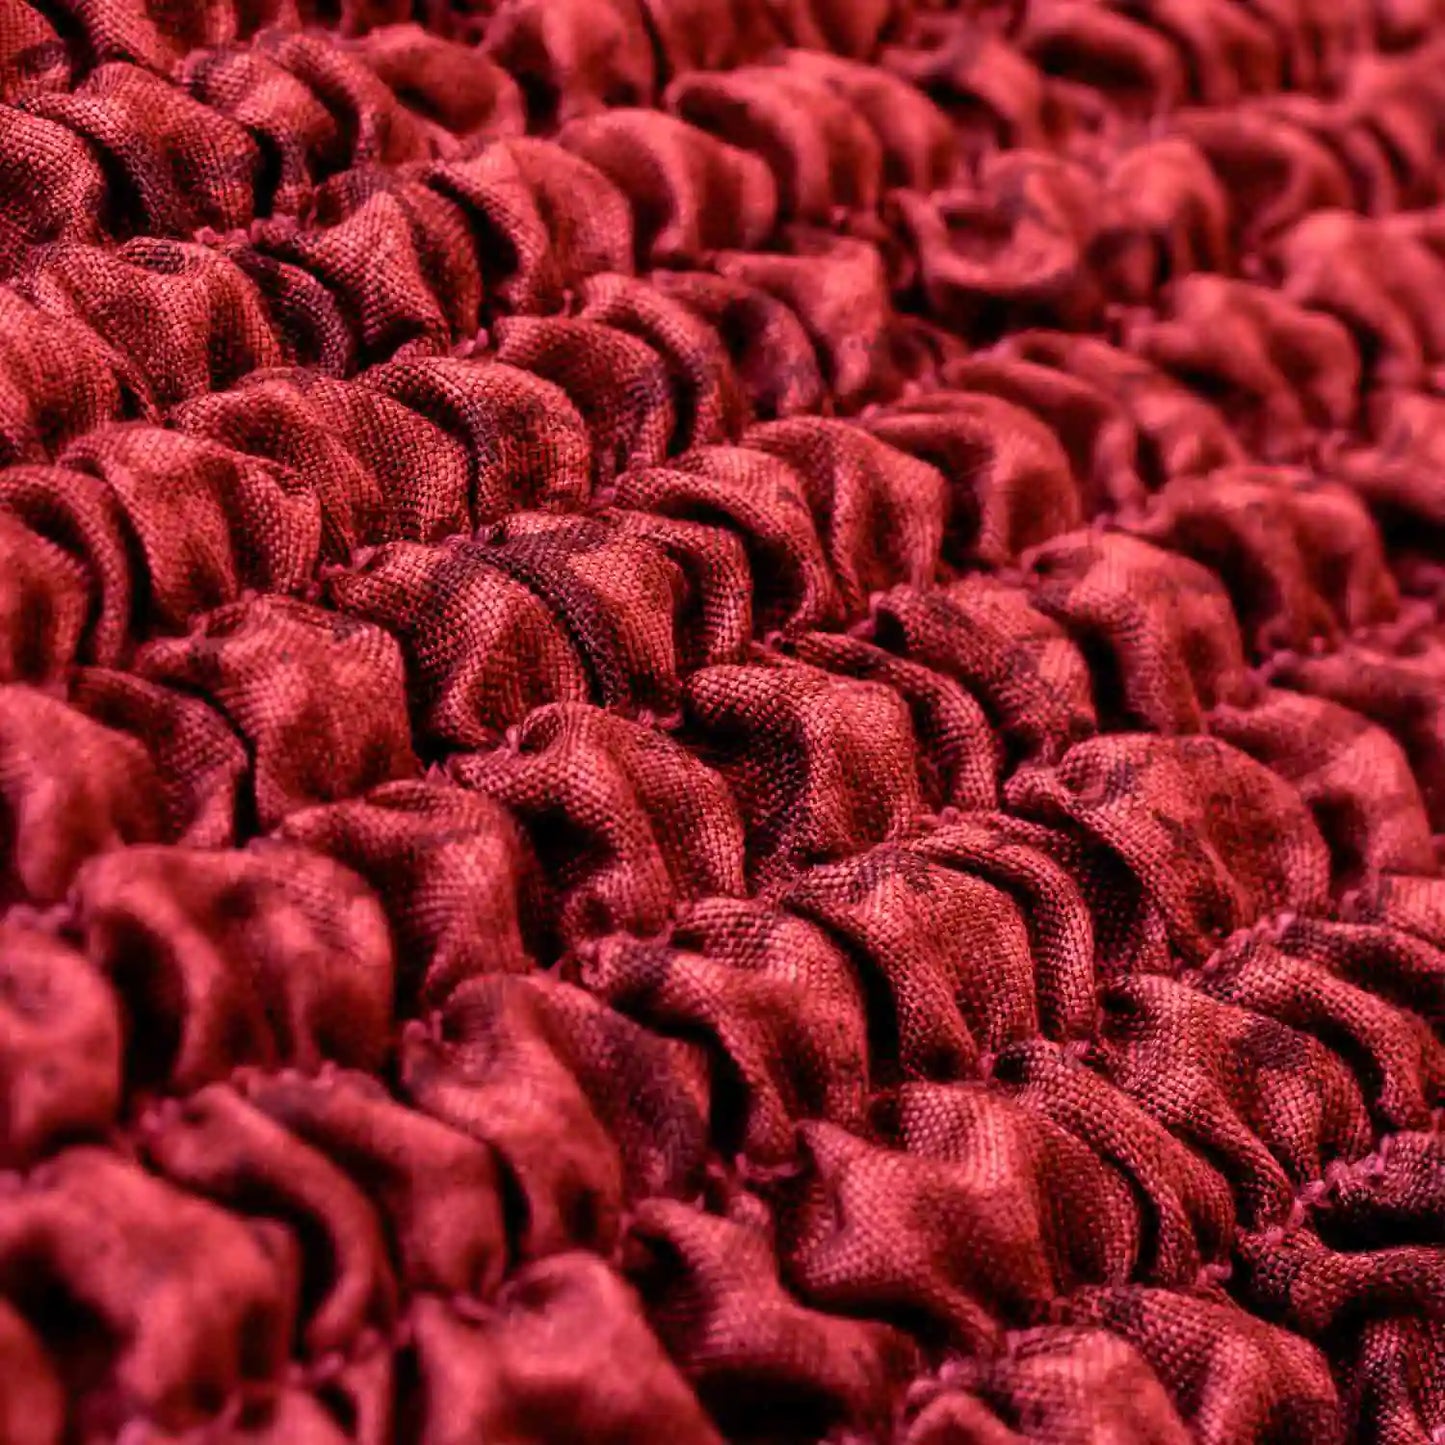 Footstool Cover - Vittoria Red, Microfibra Printed